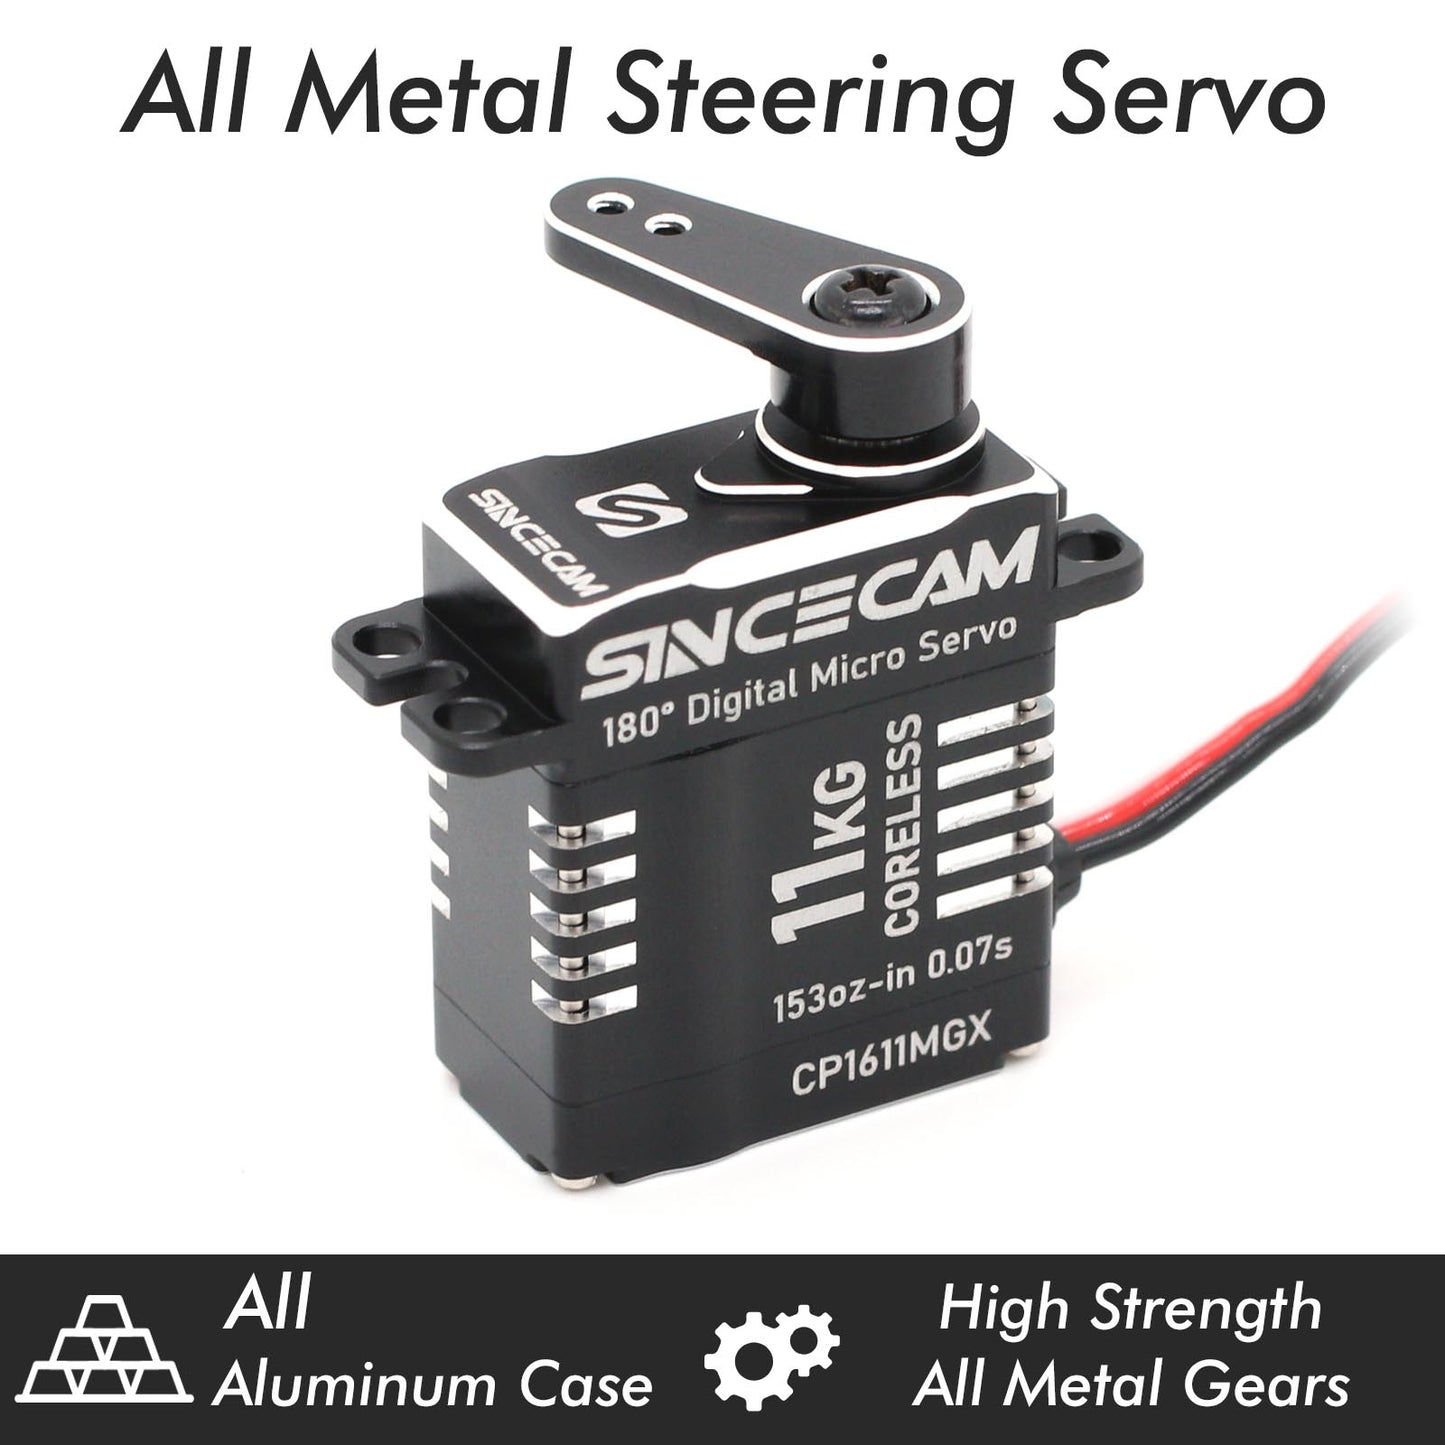 Sincecam 11kg High Torque Coreless Micro Servo IP66 Waterproof Digital Servos All Metal Gear Aluminum Case Suitable 1/18 1/24 RC Crawler Upgrade Parts(Black)